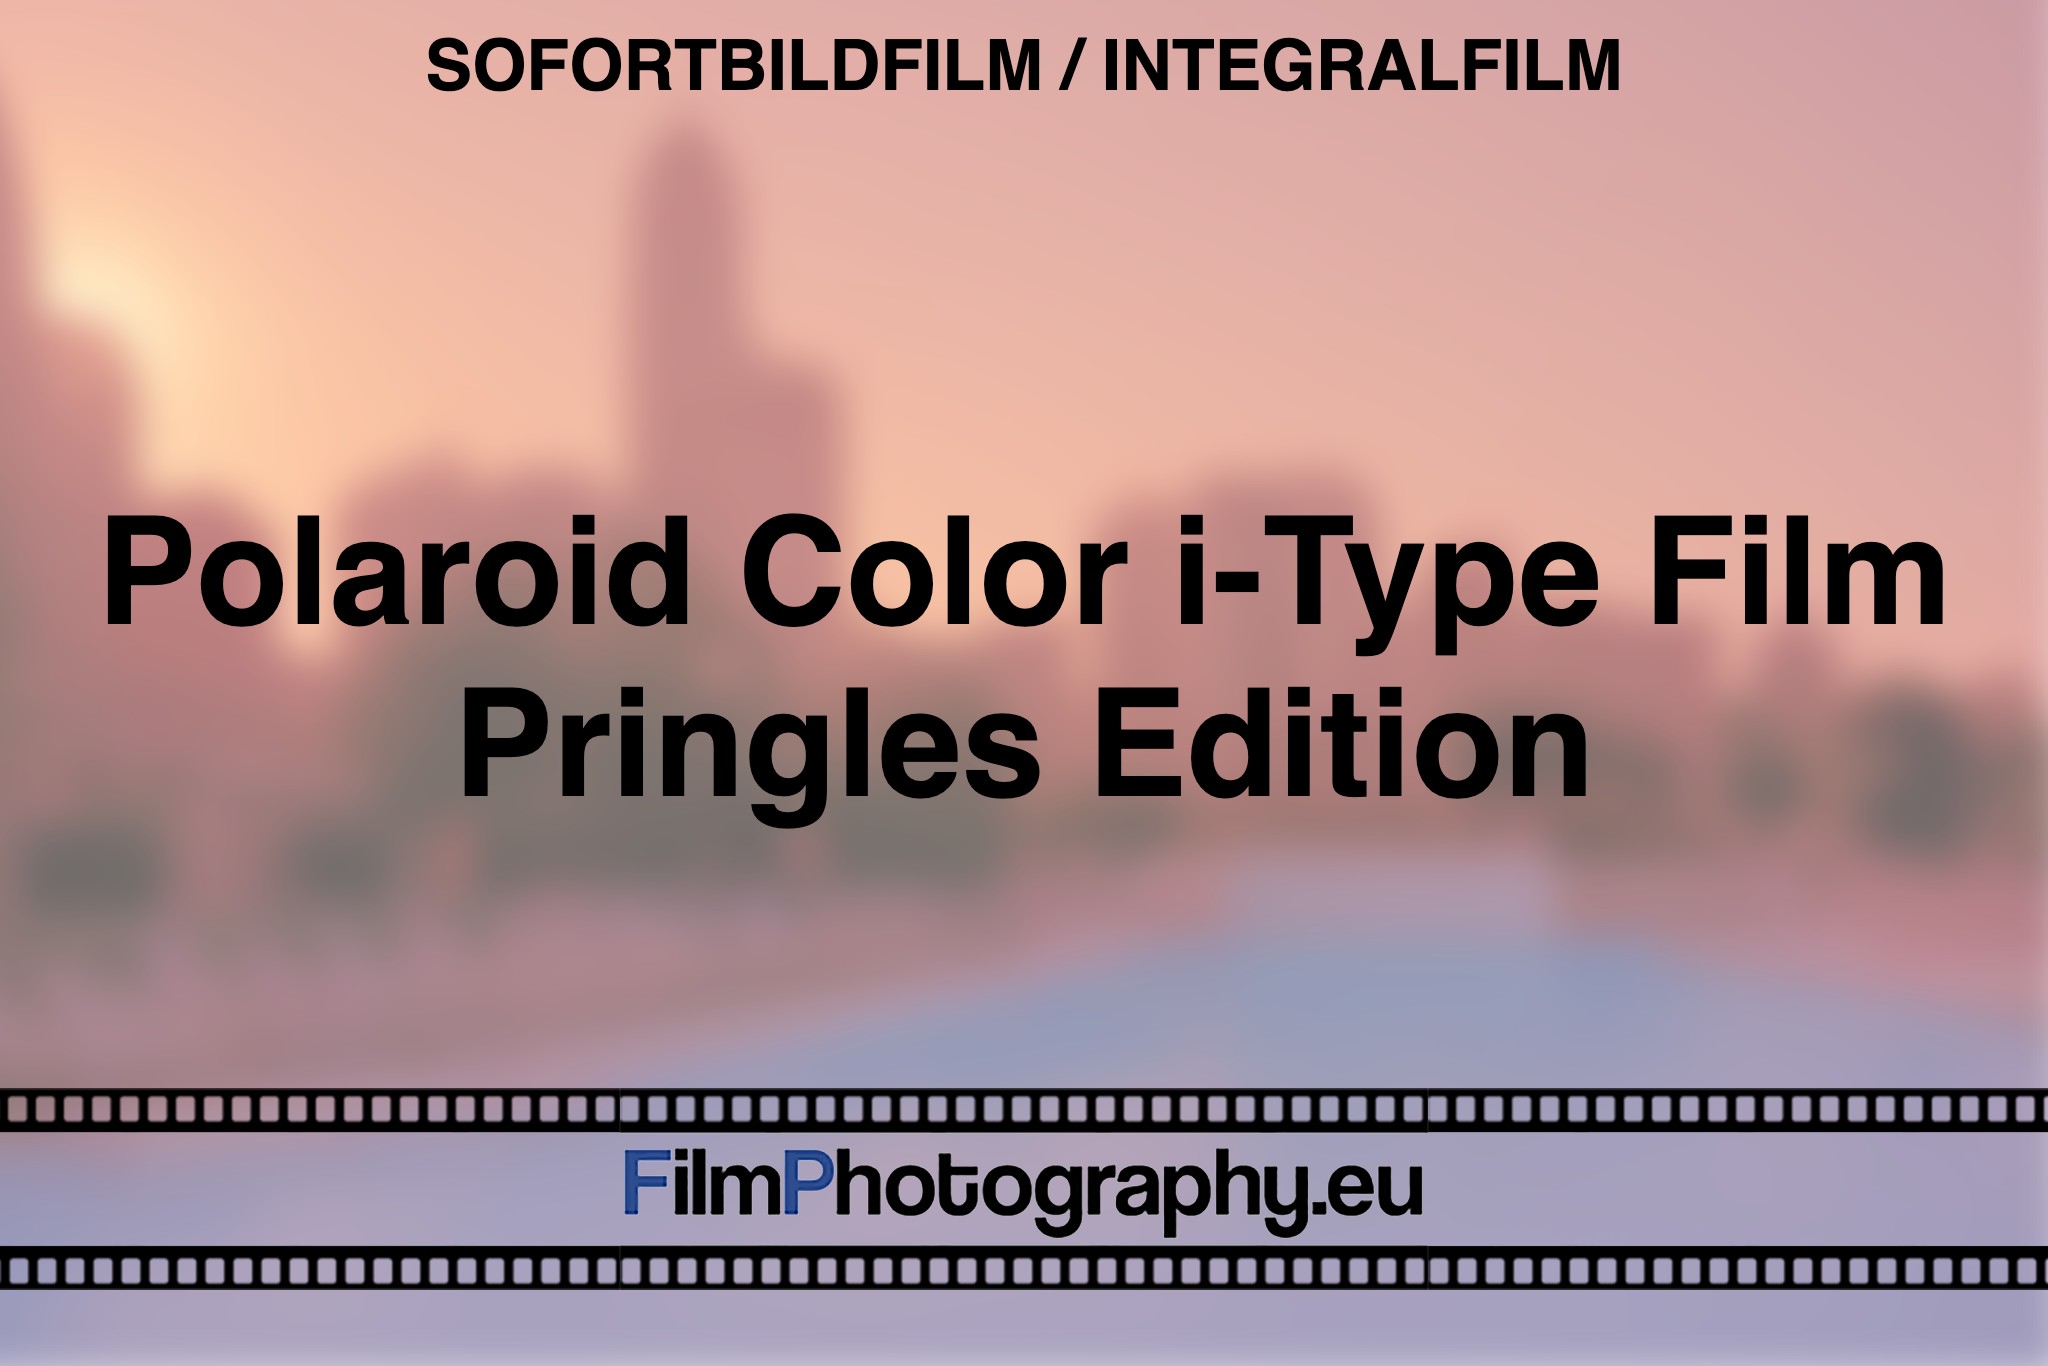 polaroid-color-i-type-film-pringles-edition-sofortbildfilm-integralfilm-bnv